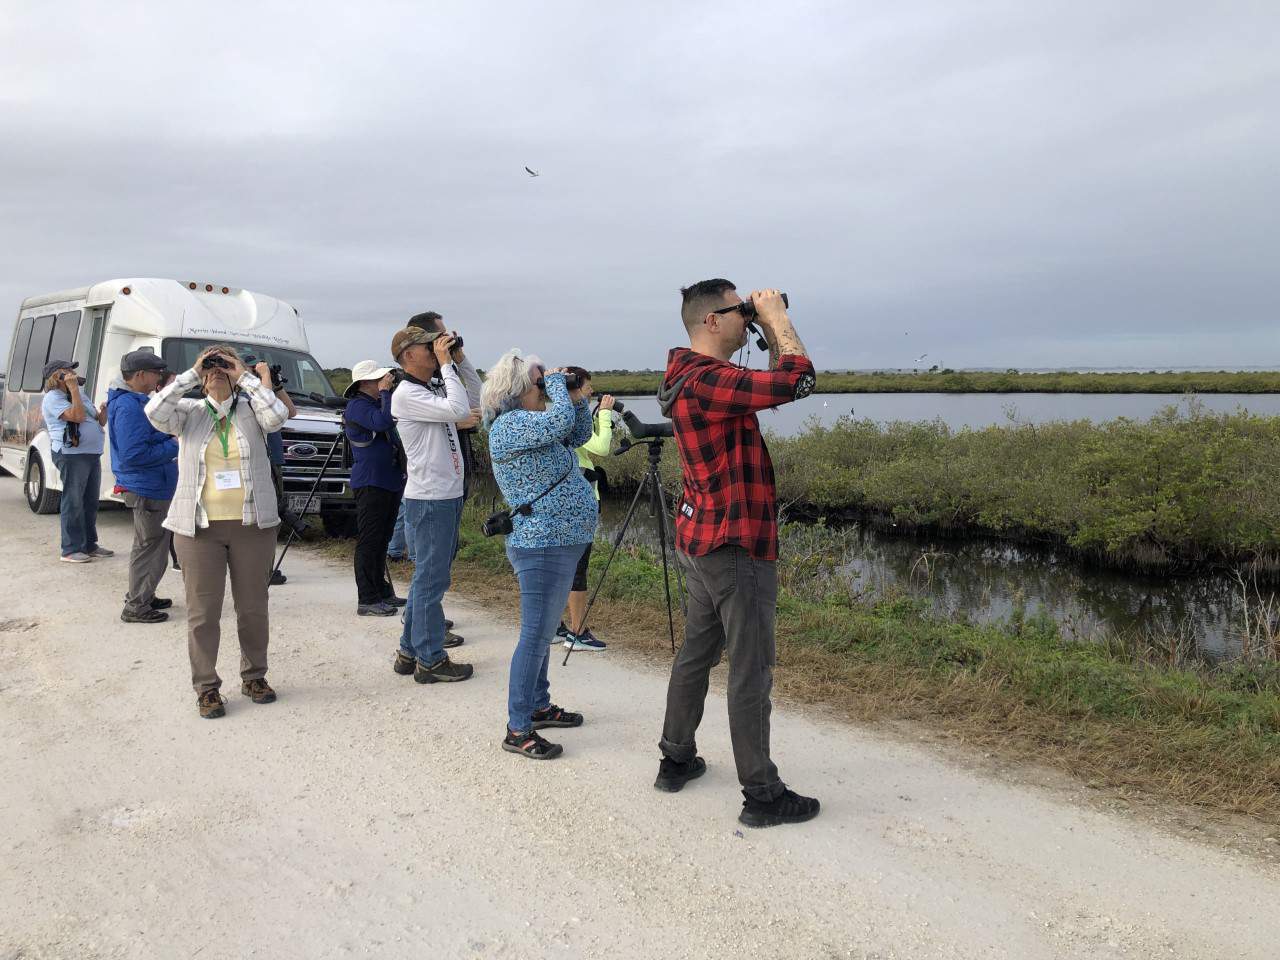 Florida birds at risk of extinction due to climate change, study says - WKMG News 6 & ClickOrlando